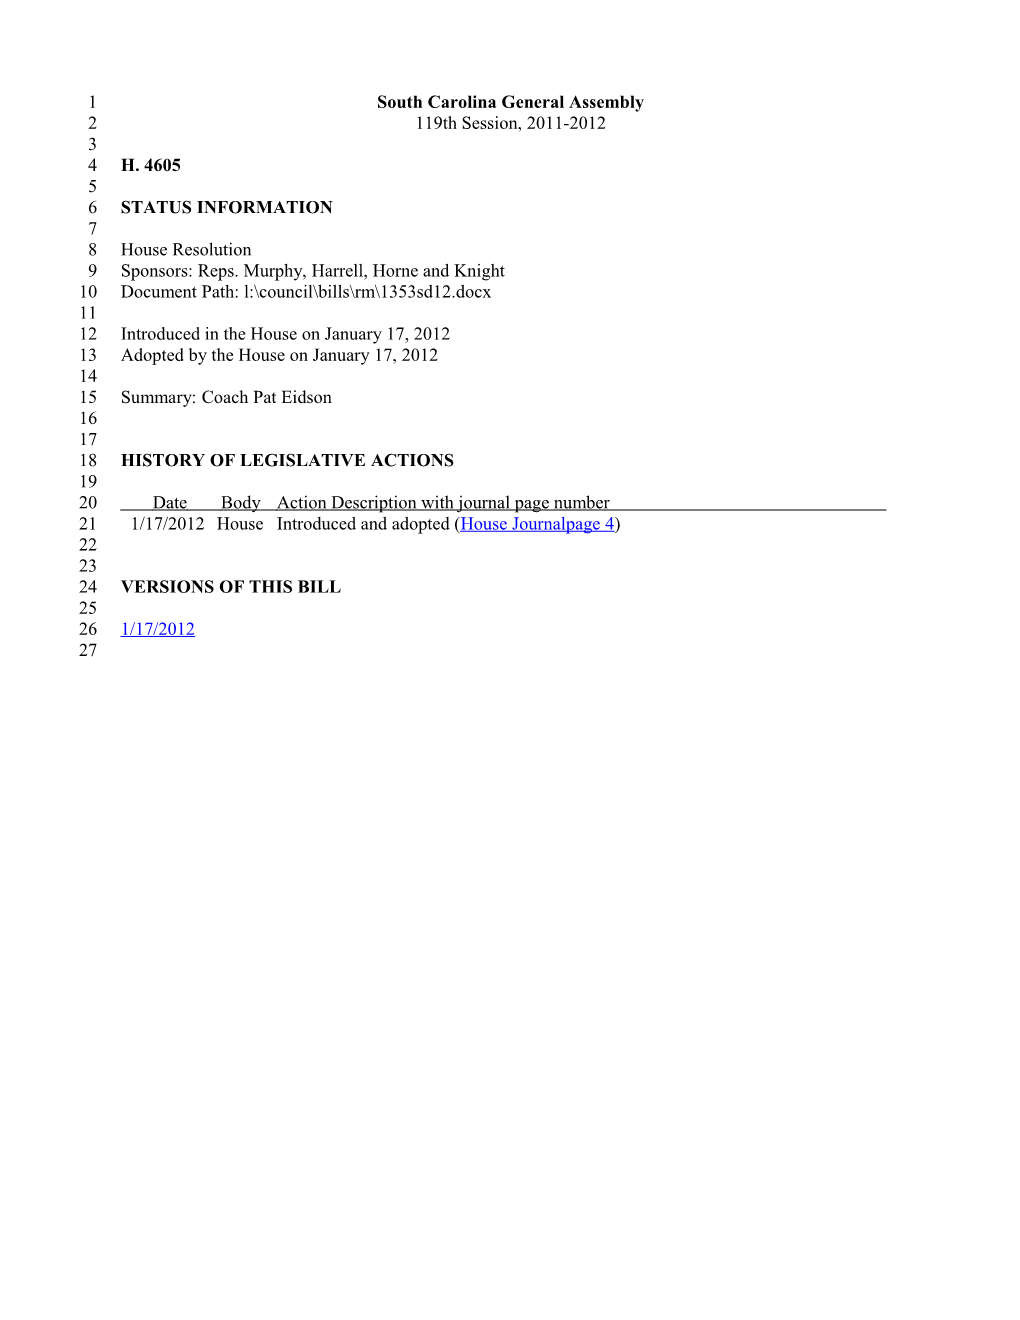 2011-2012 Bill 4605: Coach Pat Eidson - South Carolina Legislature Online